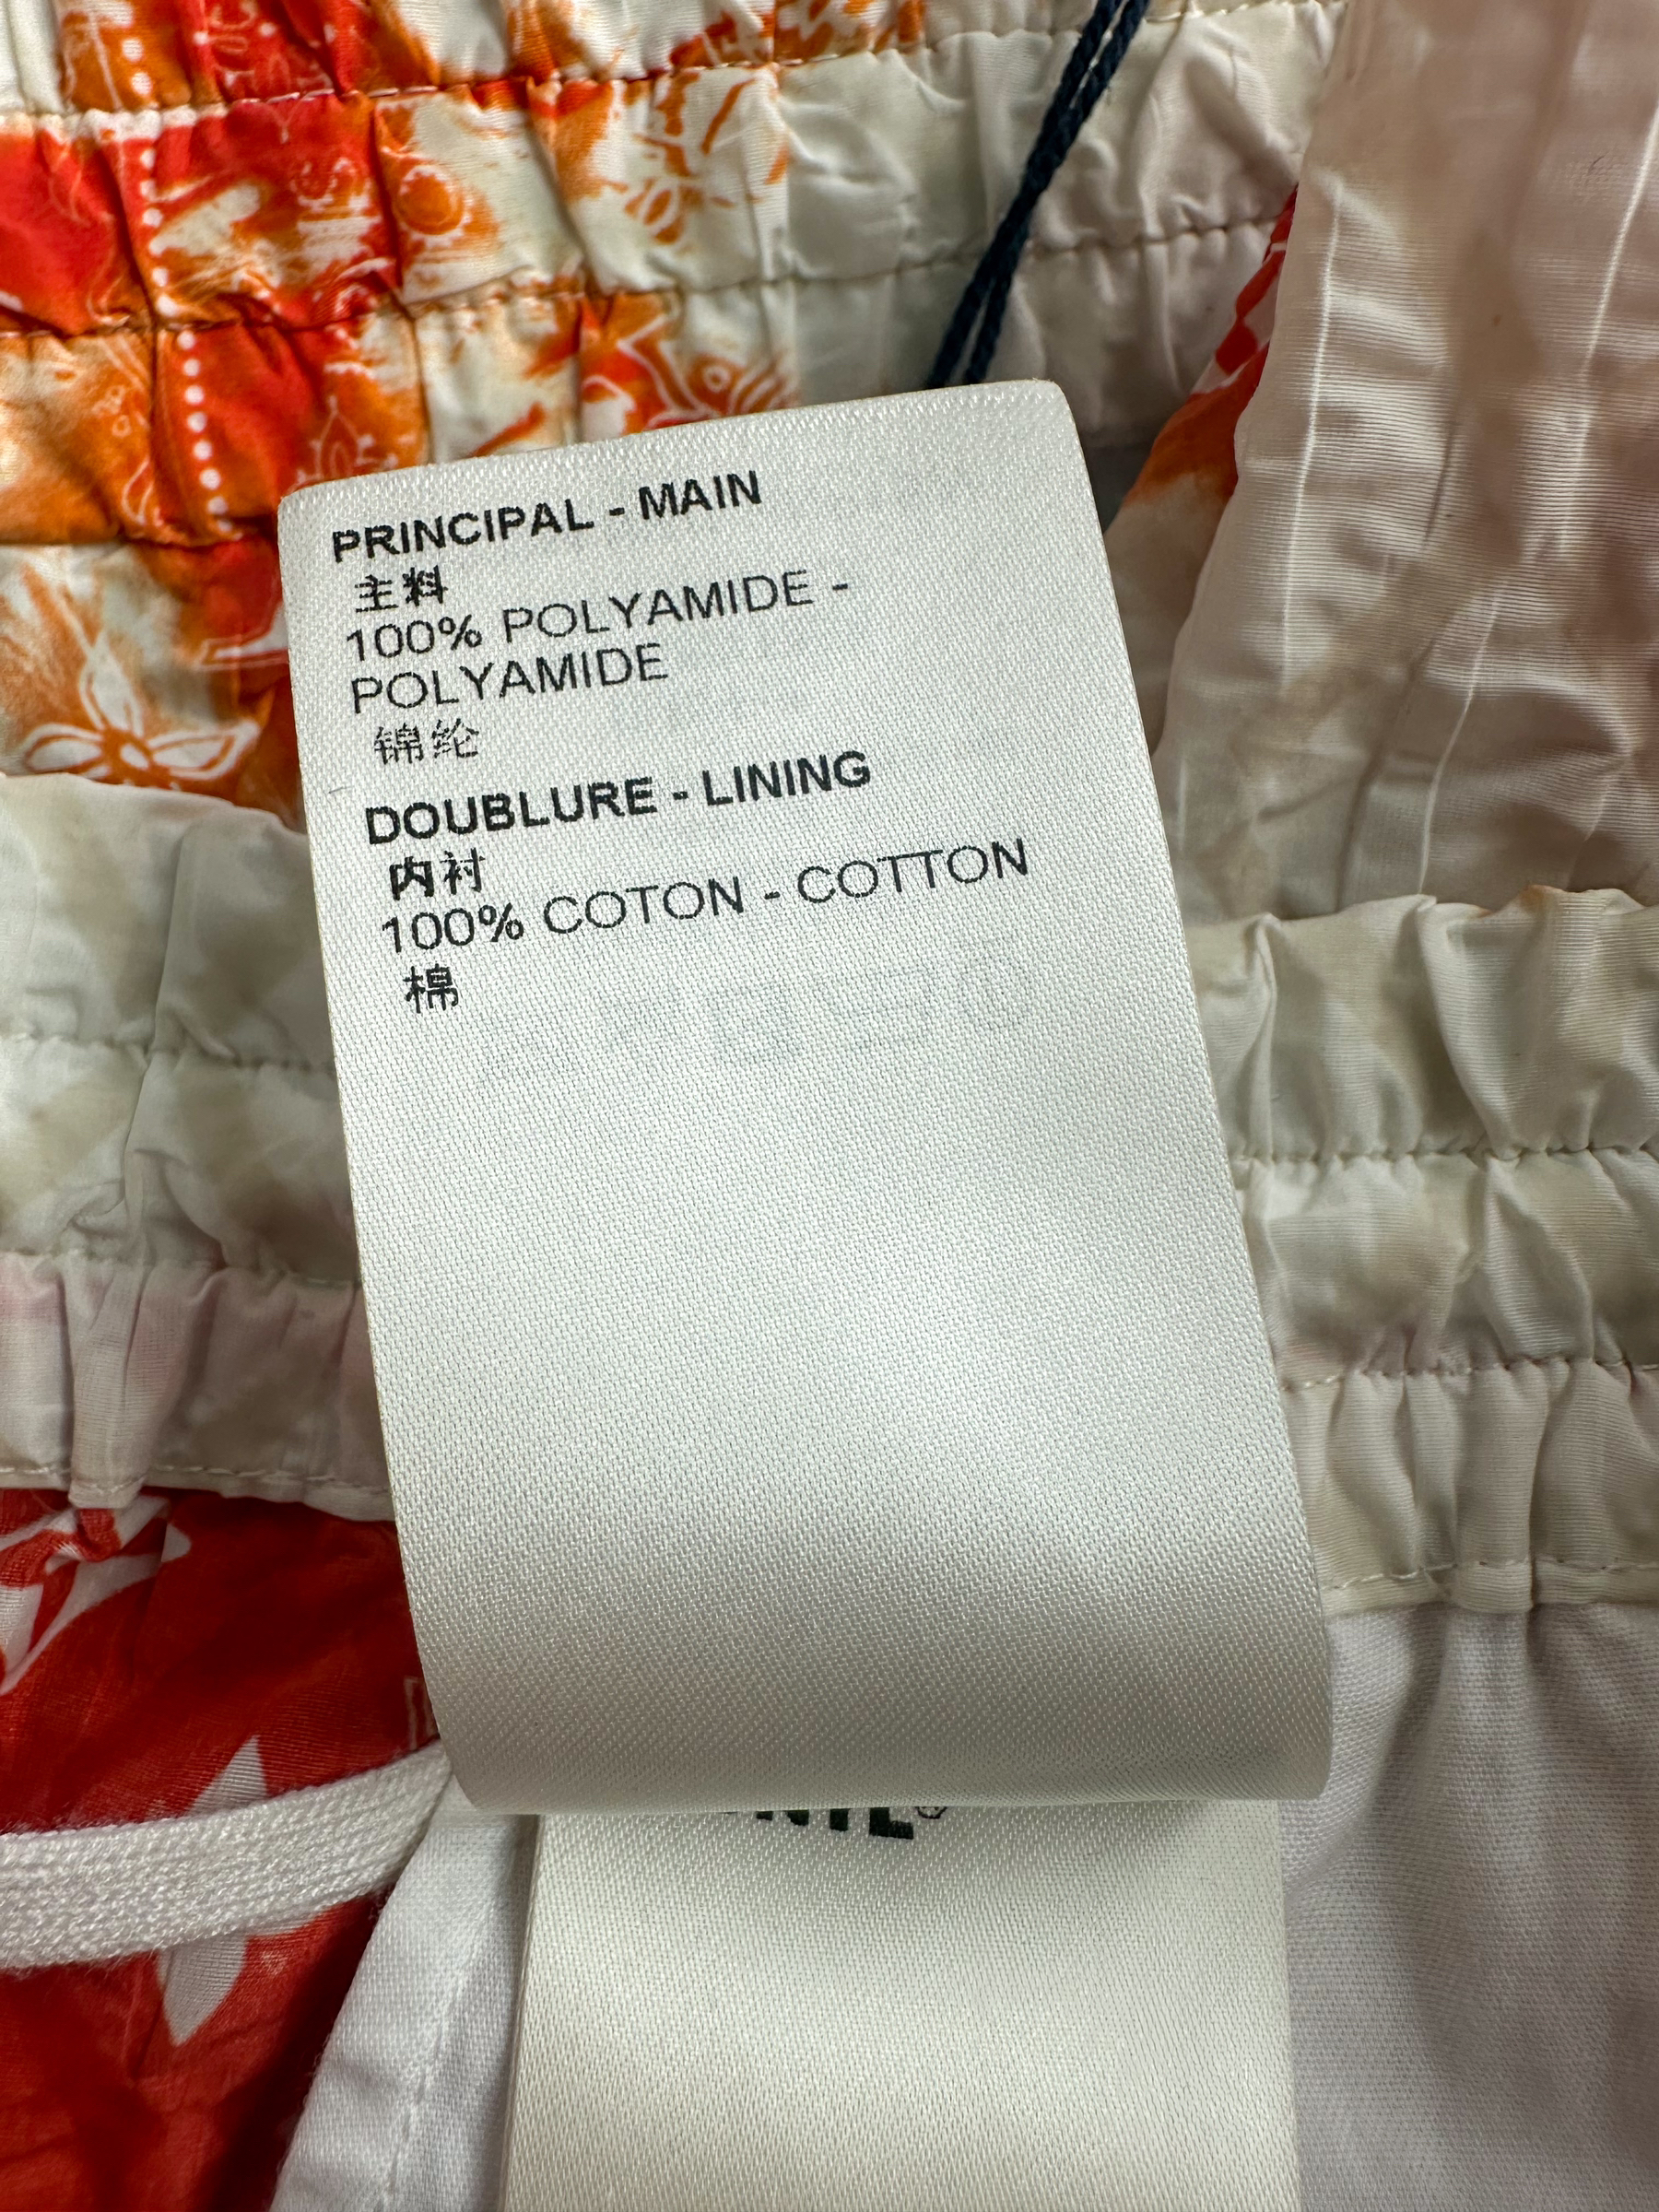 Louis Vuitton Monogram Bandana Nylon Tracksuit Shorts Orange/White